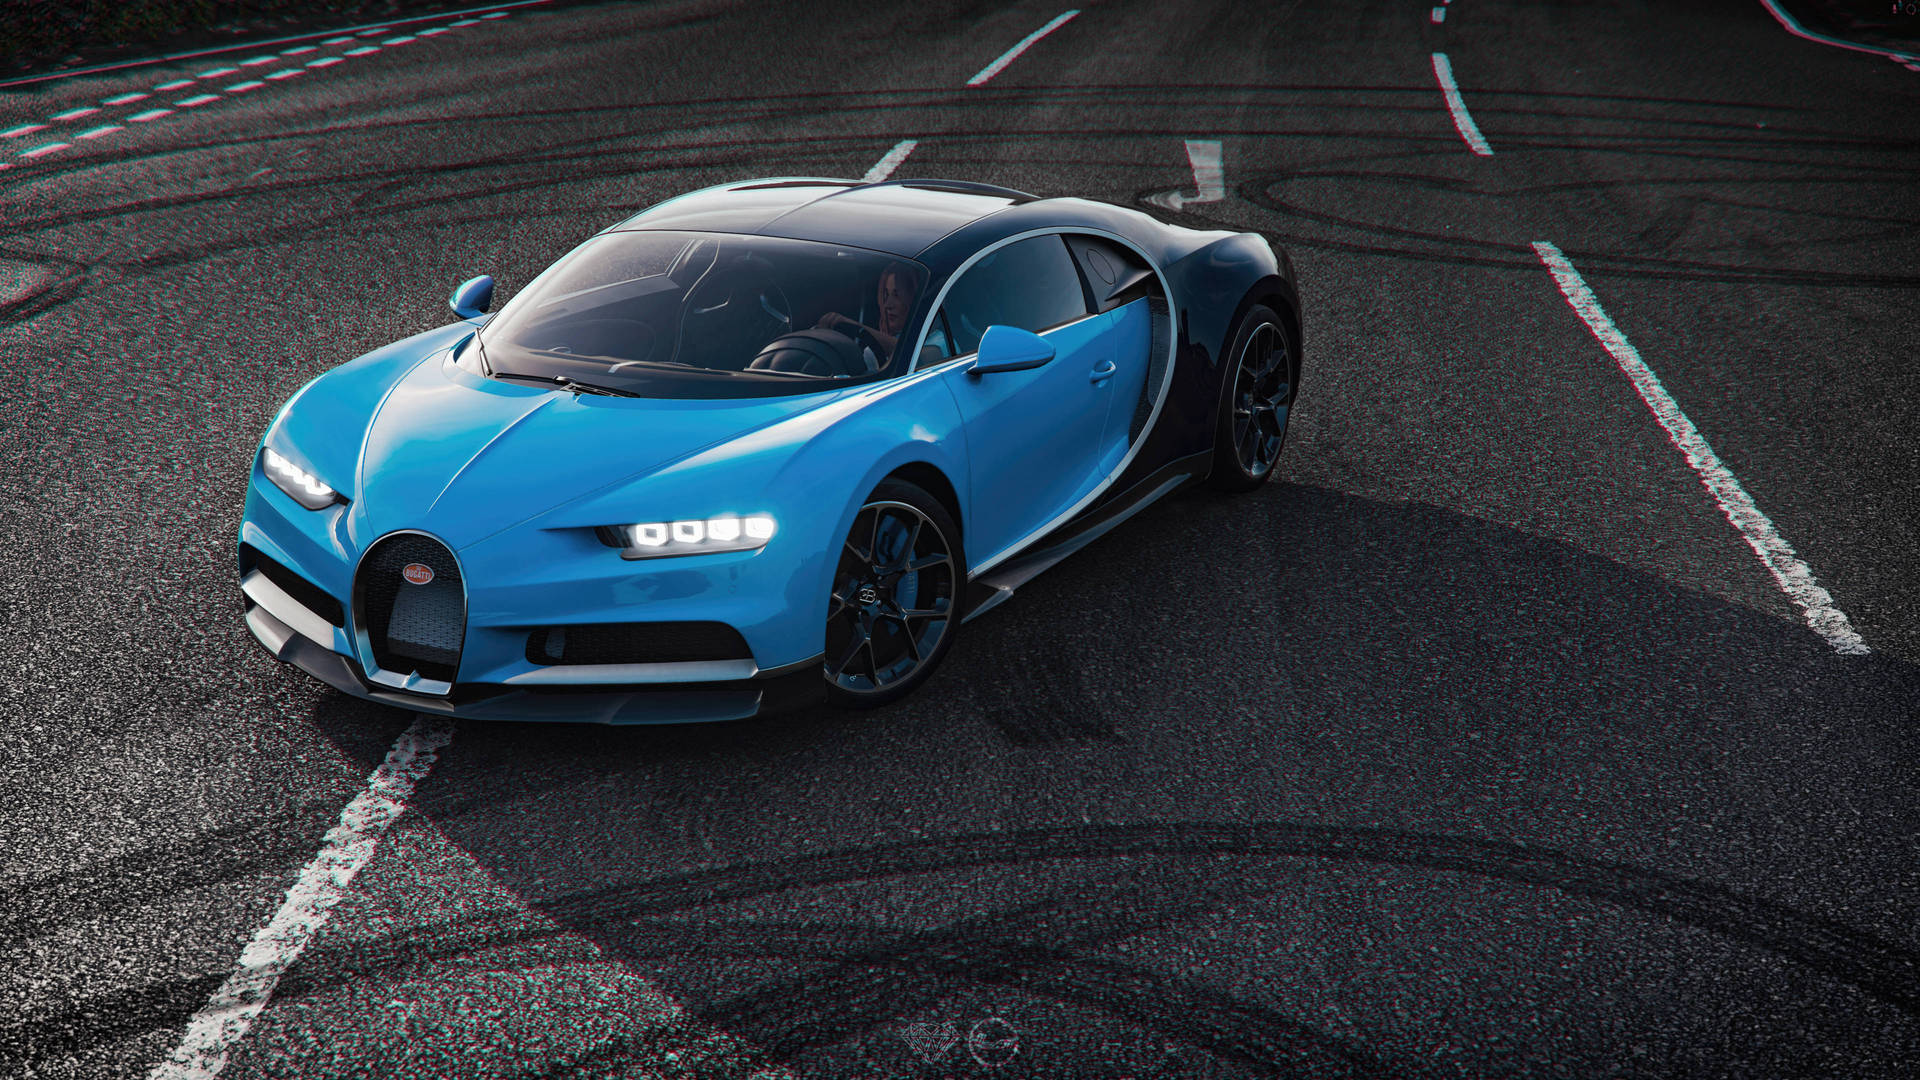 Stunning Bugatti Chiron Immersion In Forza Horizon 4 Gameplay